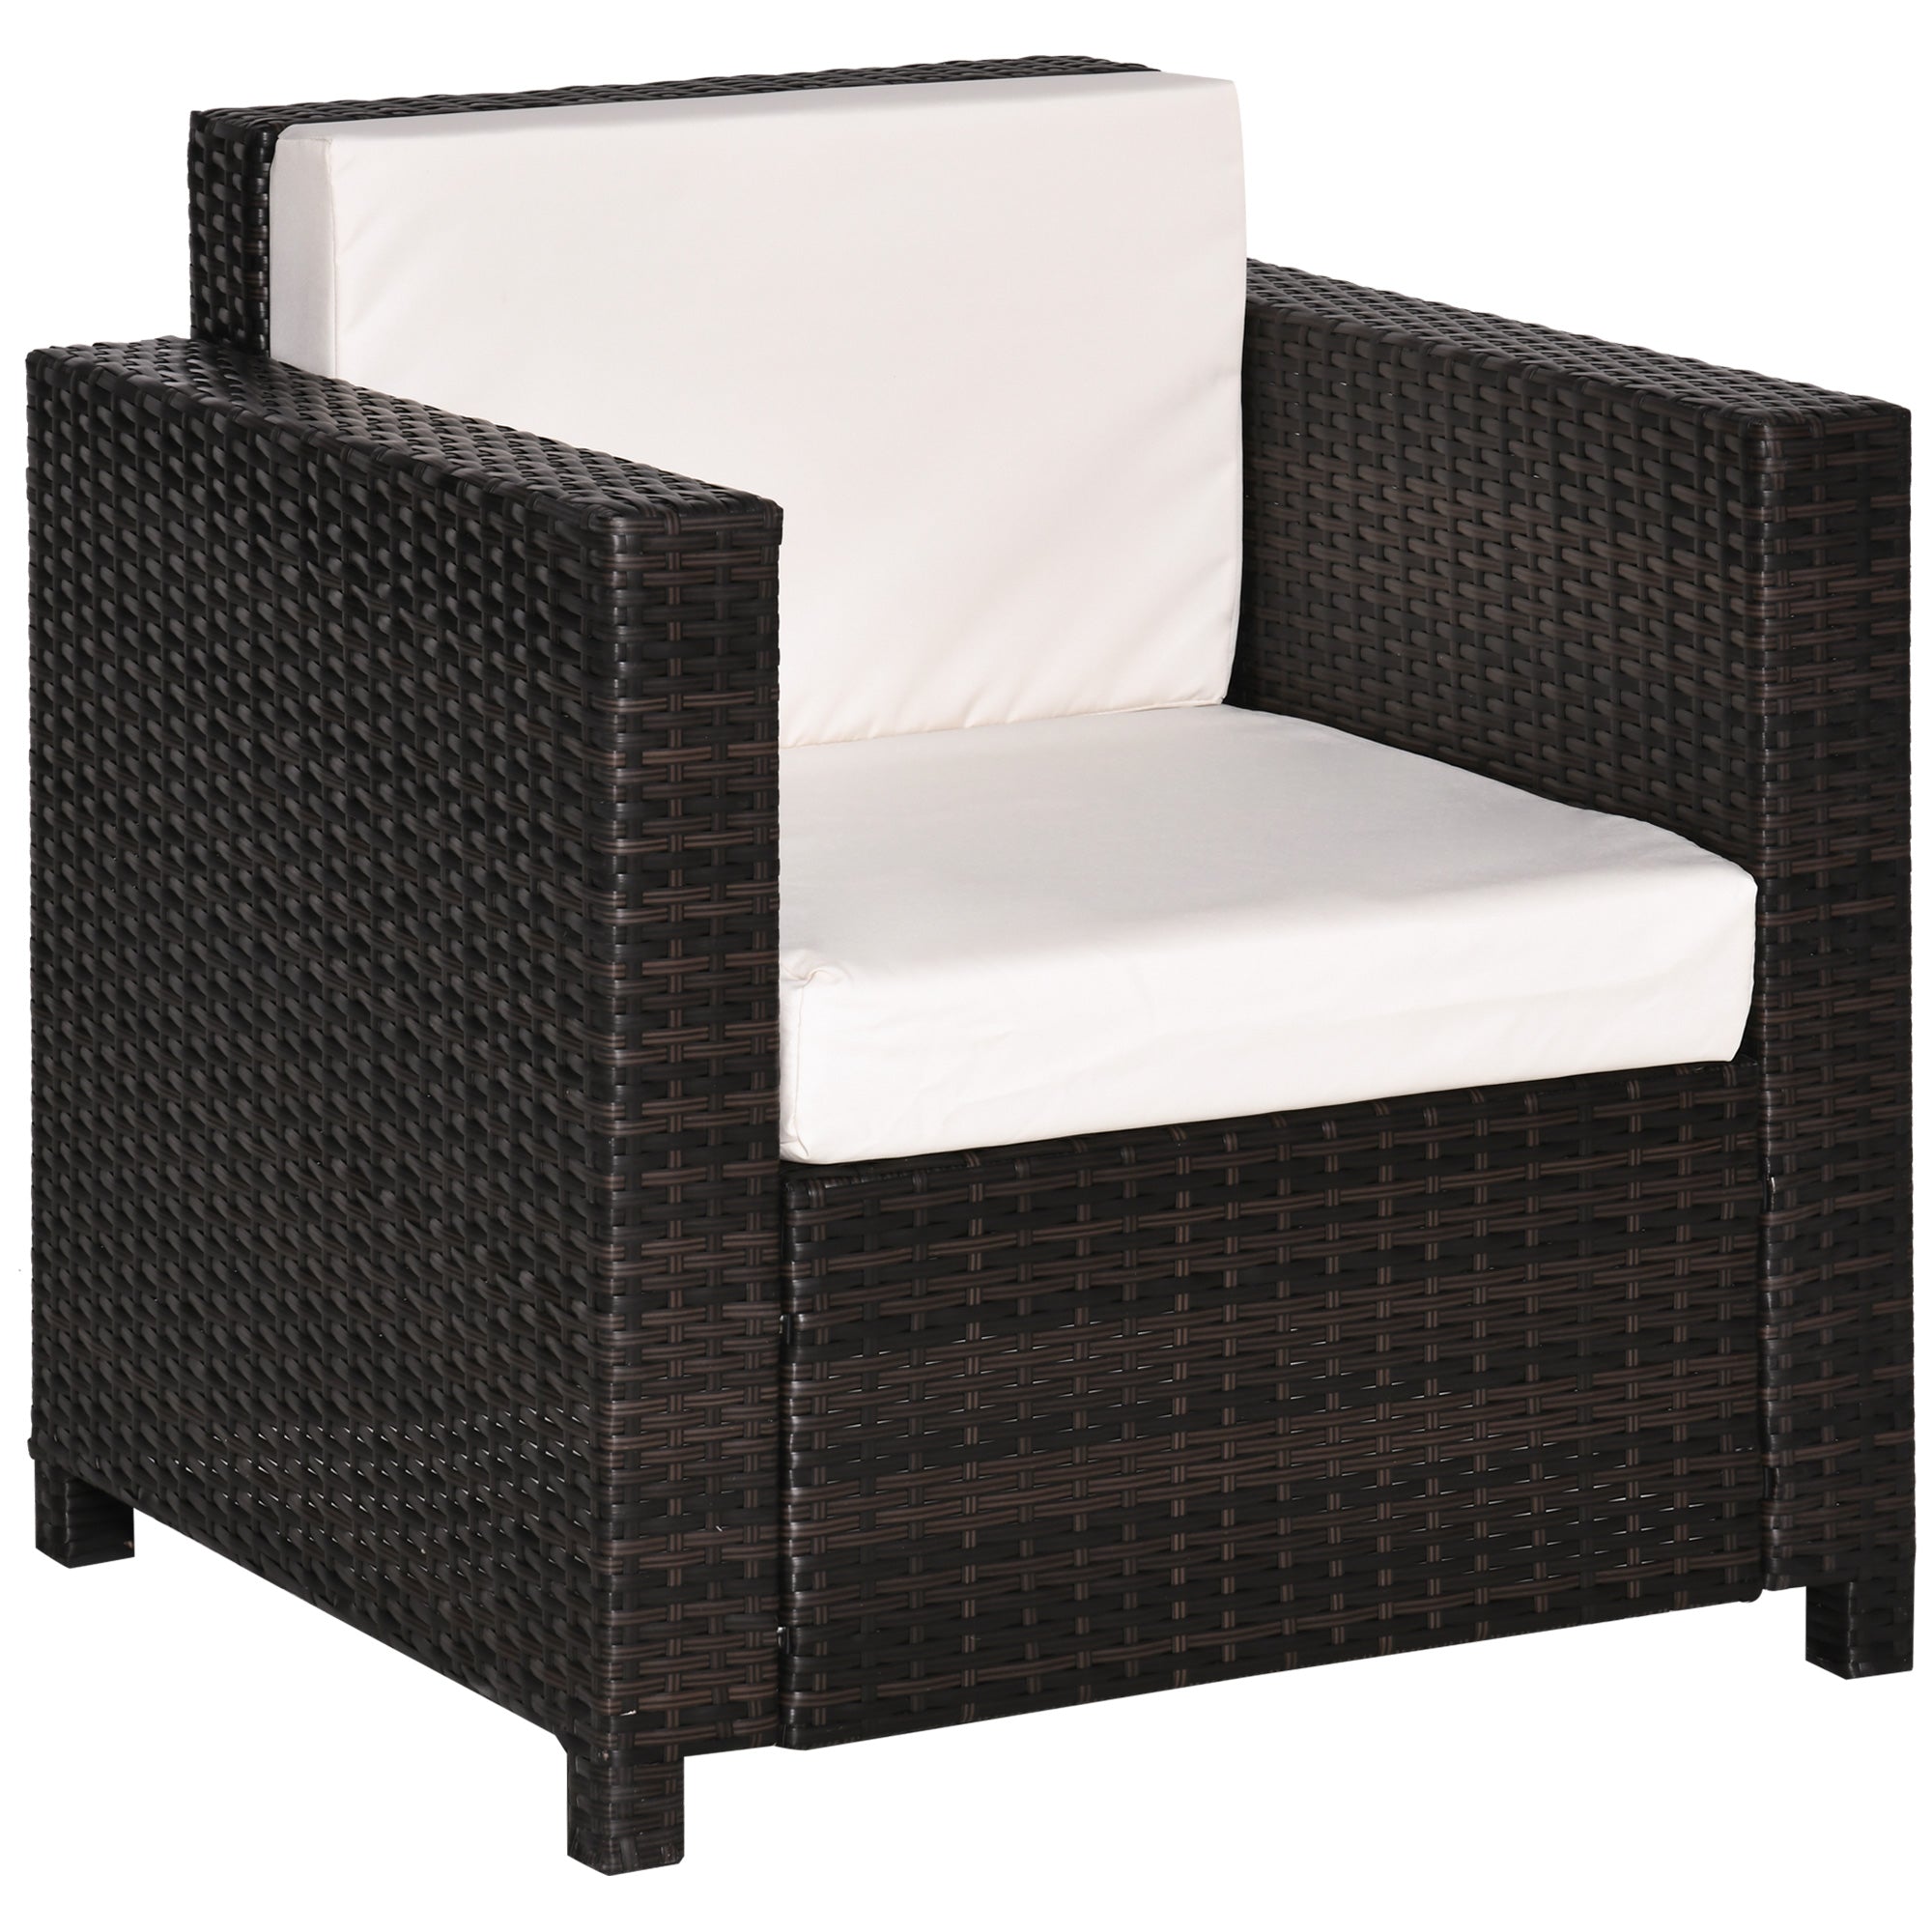 Garden Patio Rattan Wicker Furniture Single Cube Chair Sofa Outdoor Brown - Outsunny  | TJ Hughes